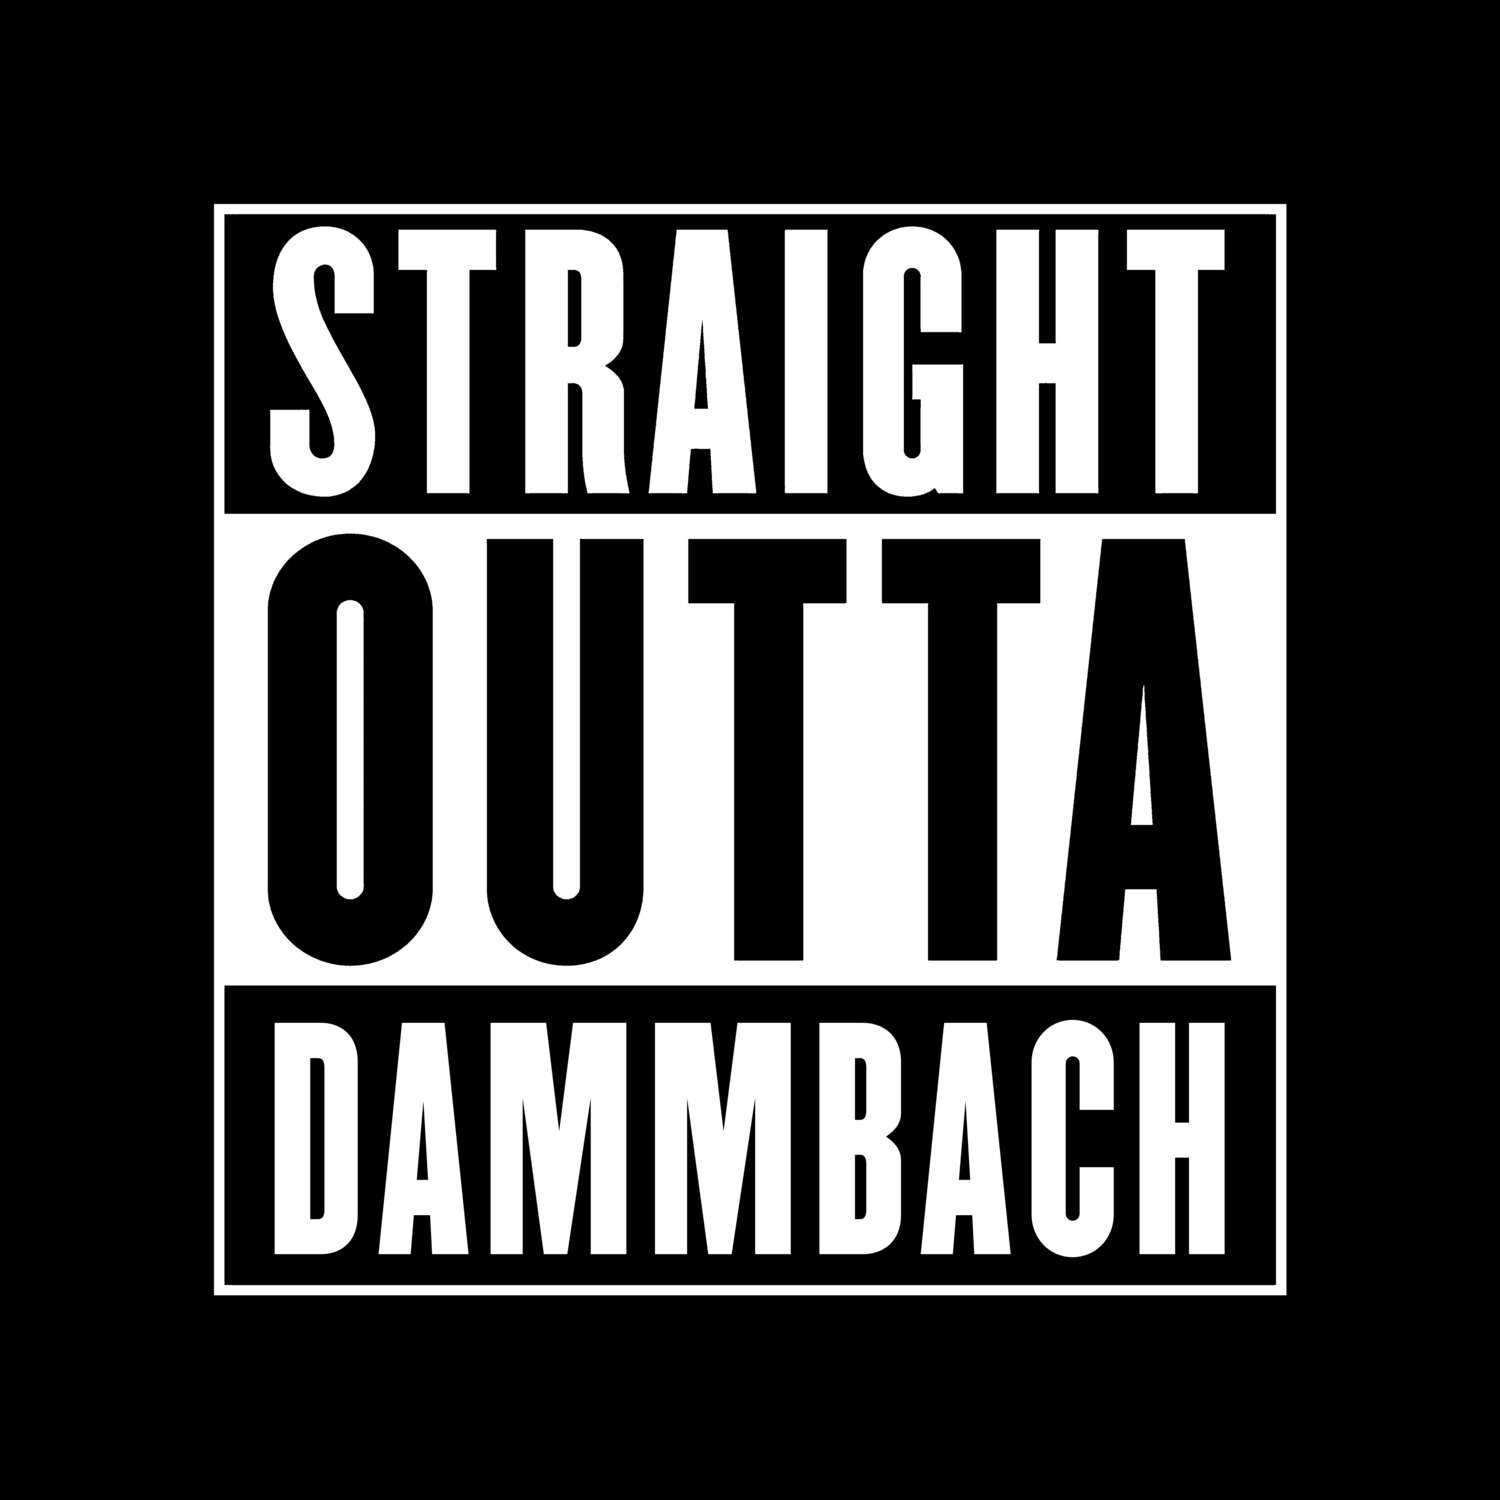 Dammbach T-Shirt »Straight Outta«